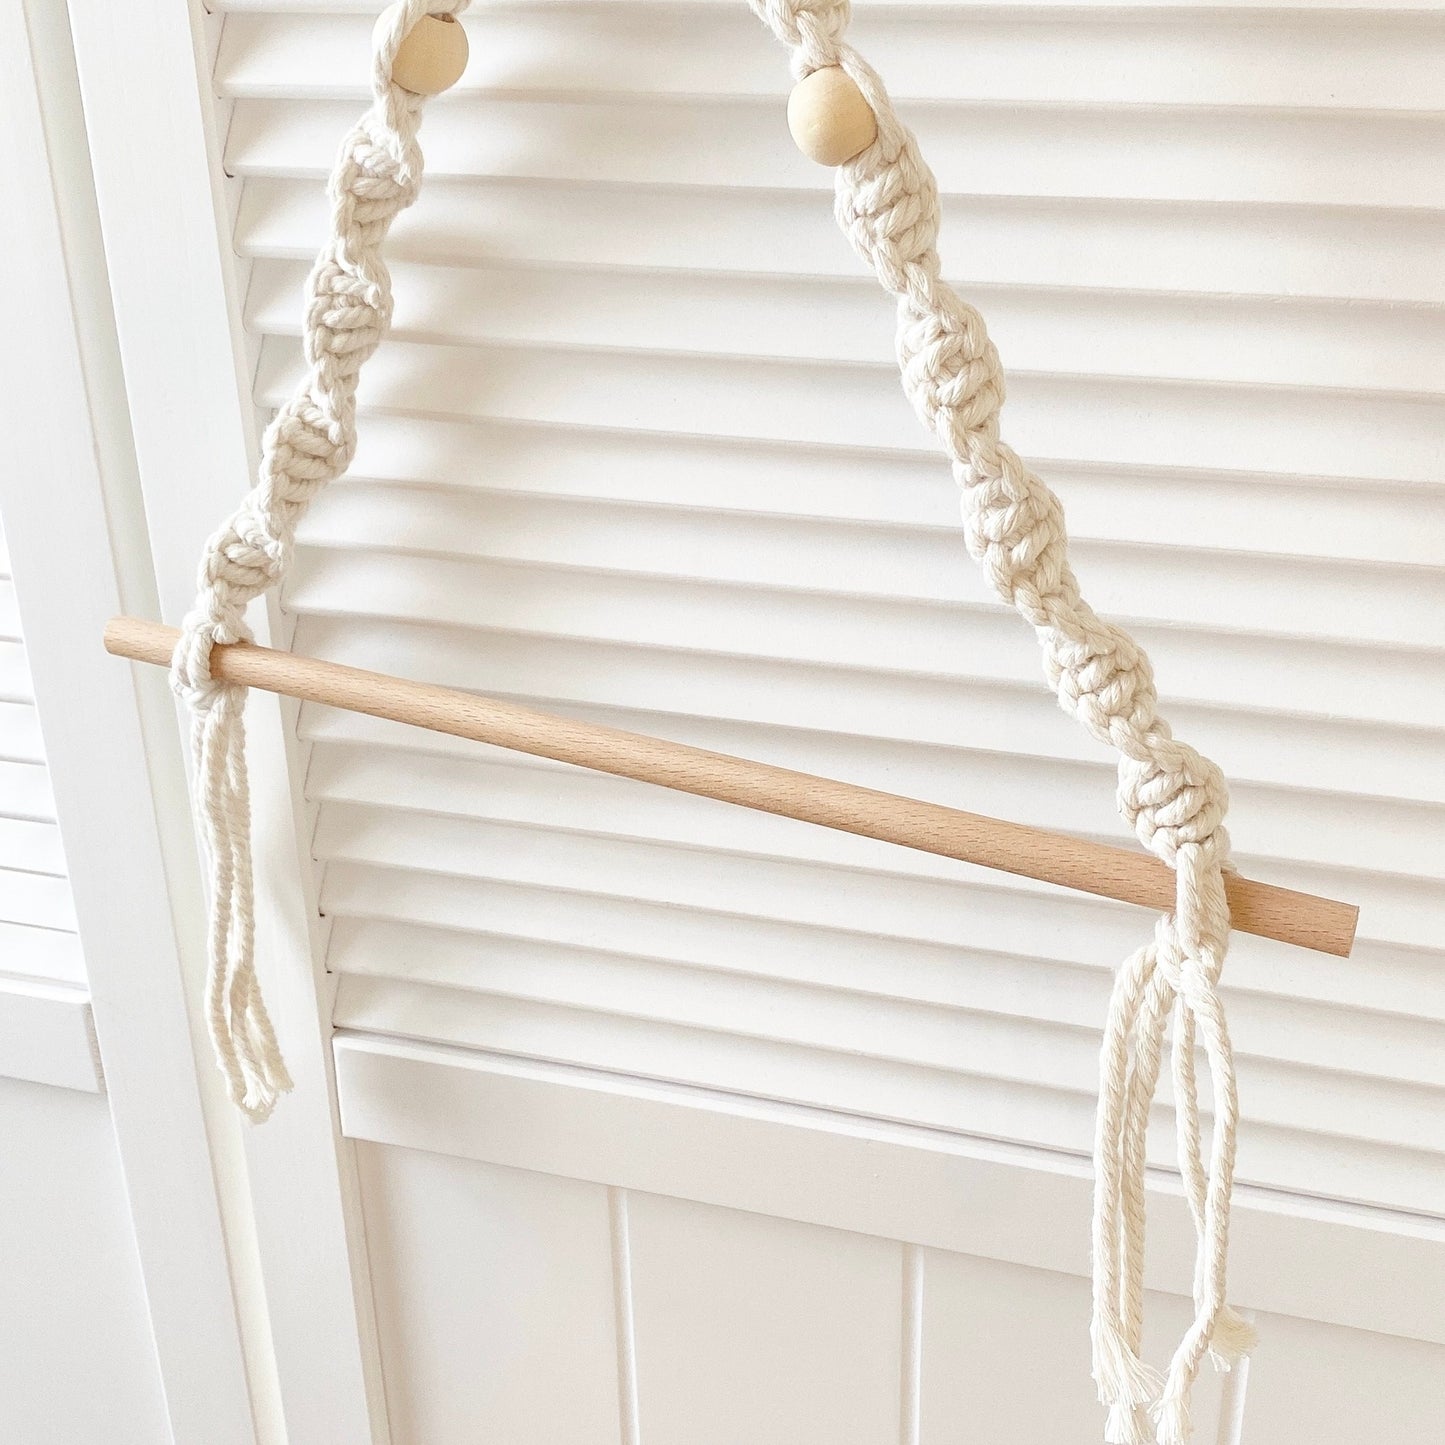 wood rope kitchen paper holder